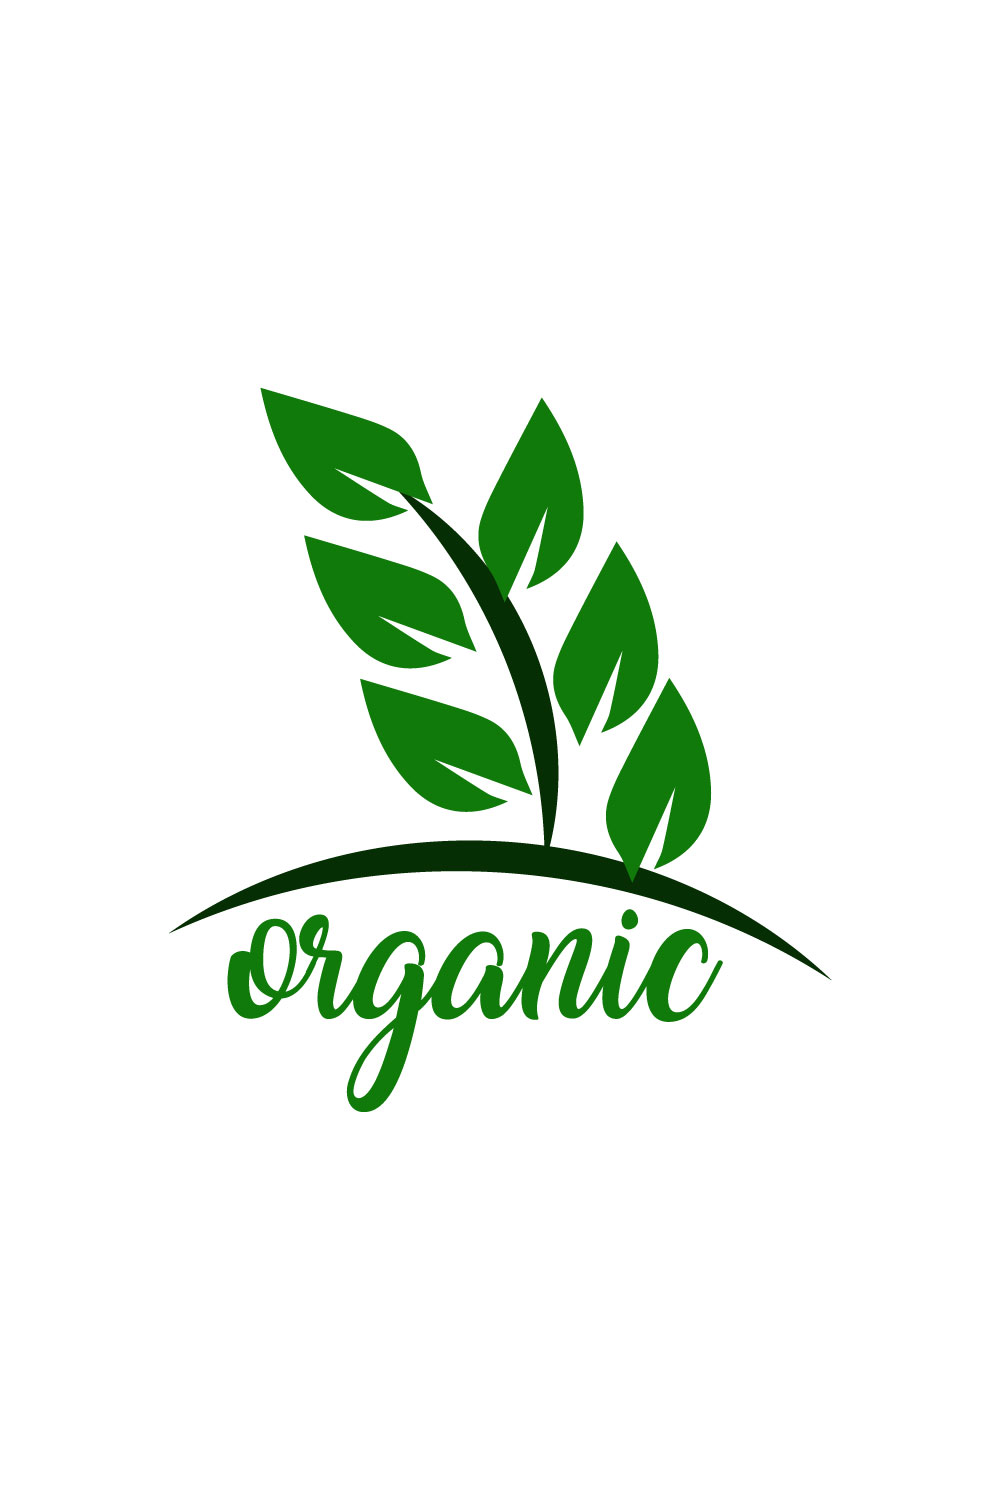 Free Earth-friendly organic logo pinterest preview image.